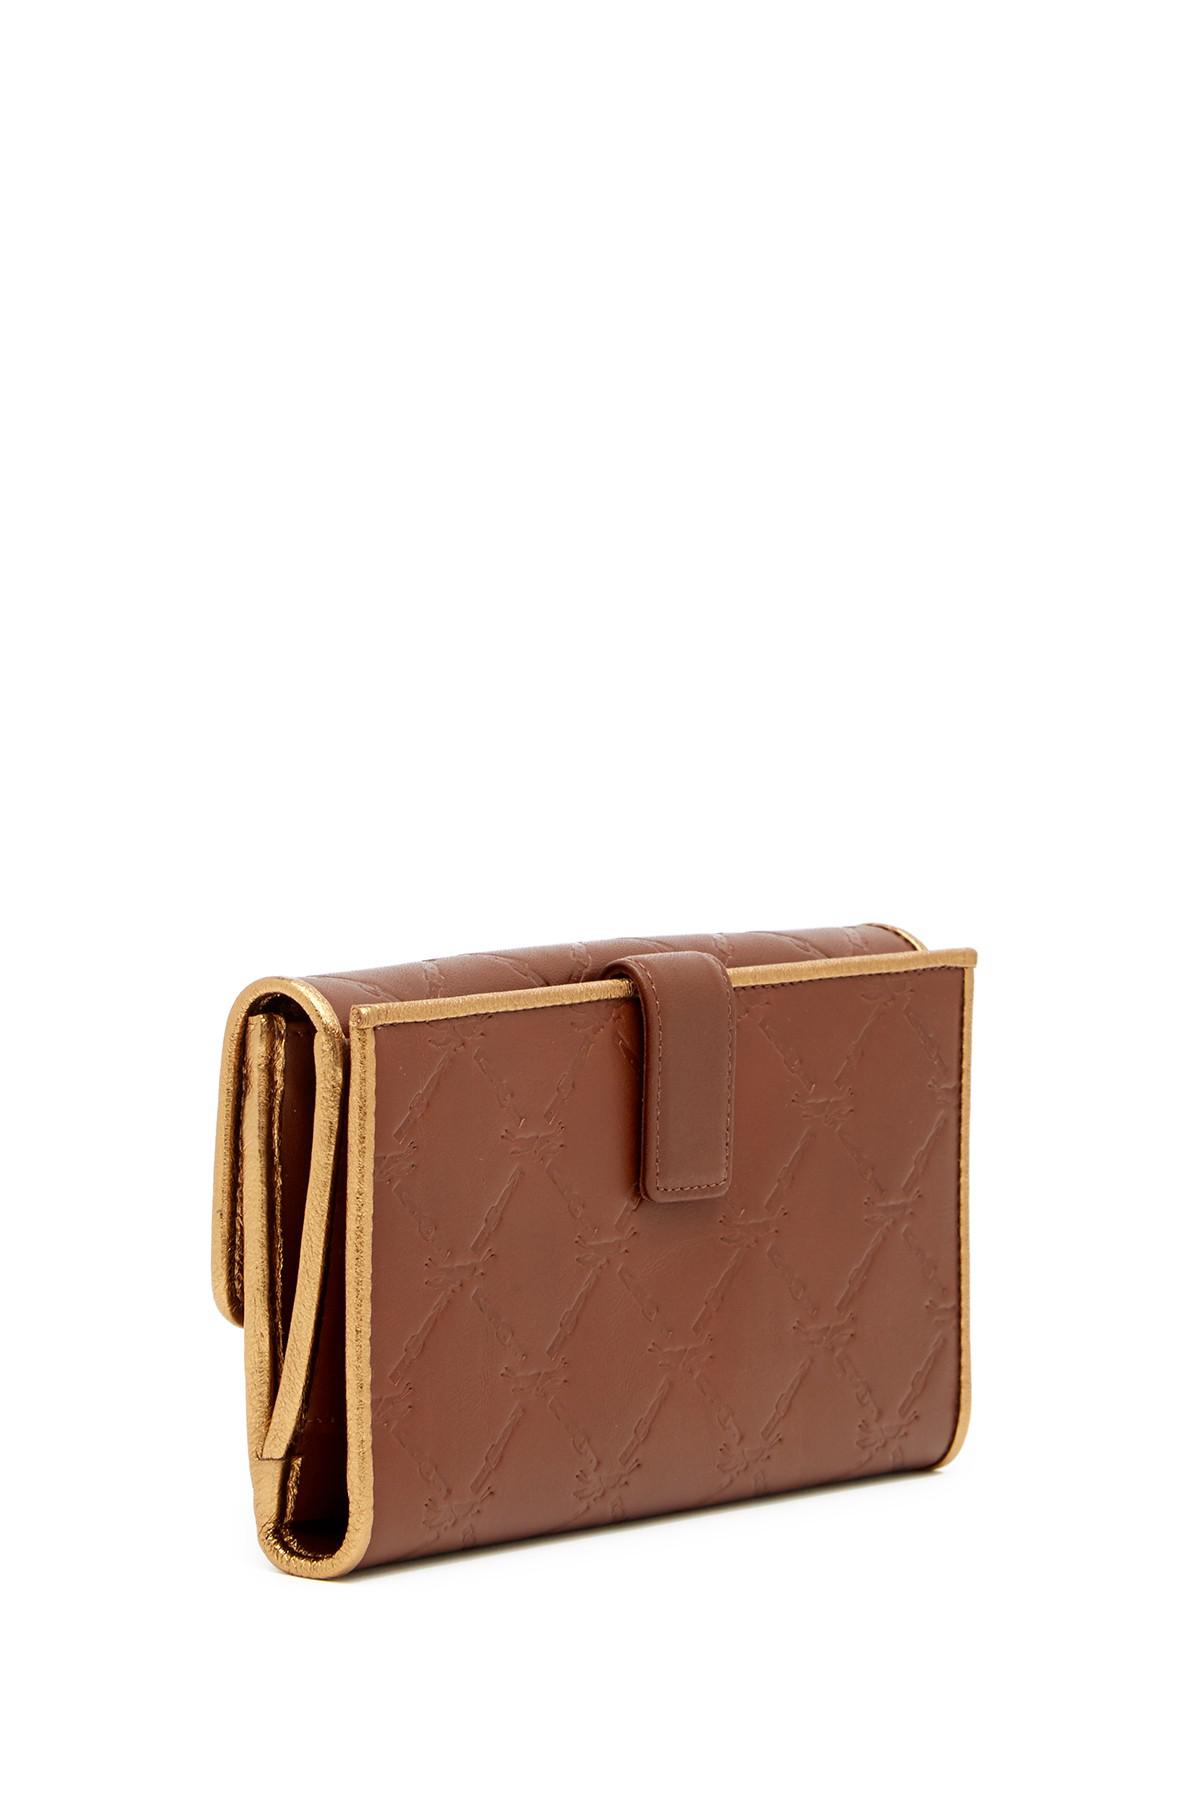 Longchamp Lm Cuir Leather Clutch Wallet in Oak Brown (Brown) - Lyst